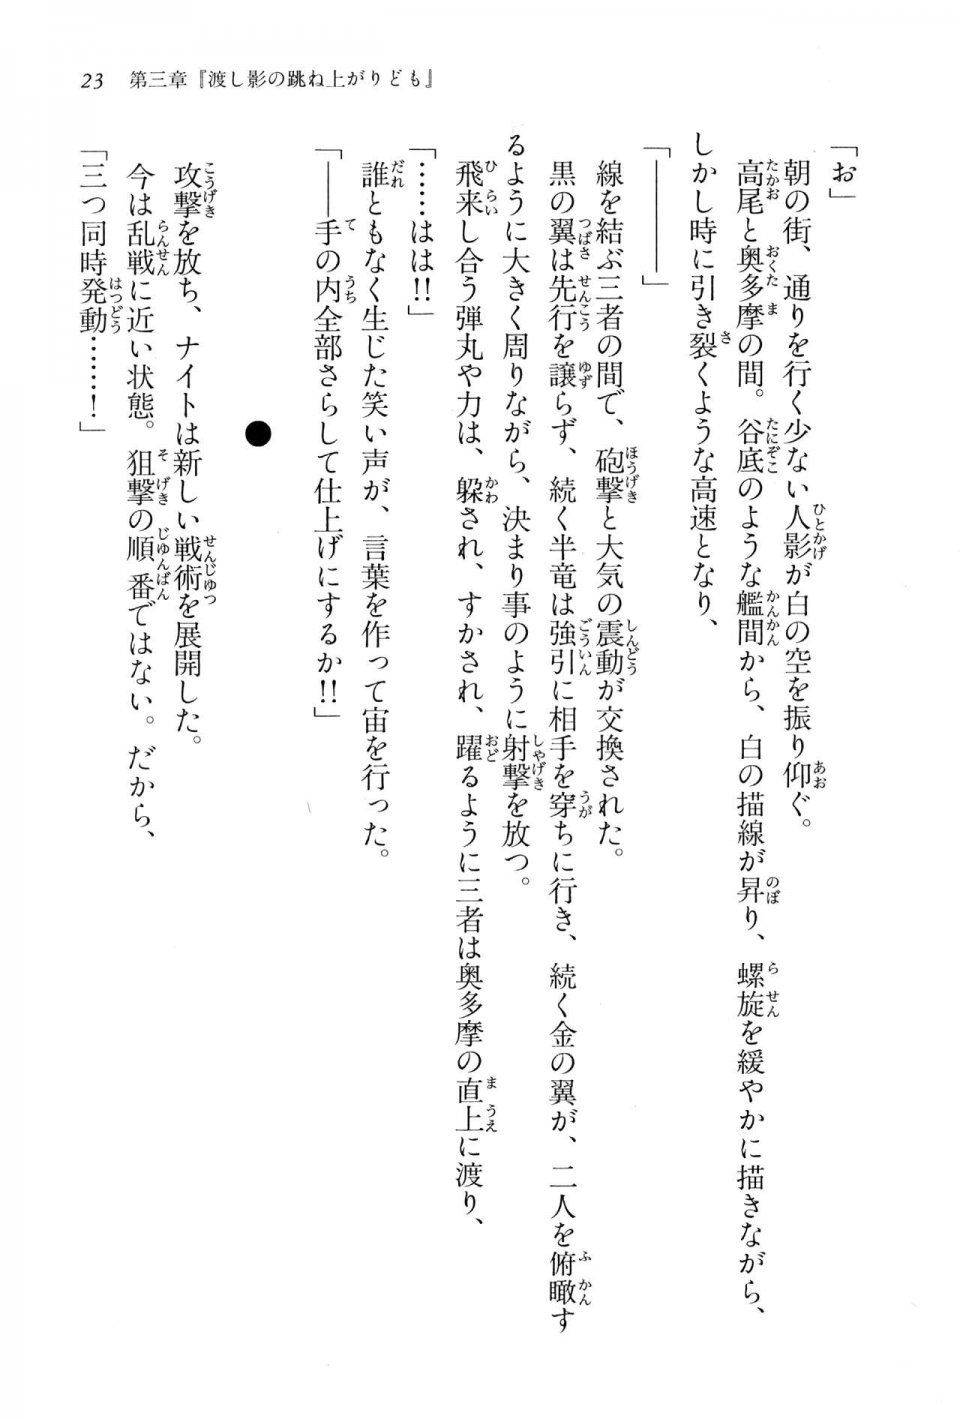 Kyoukai Senjou no Horizon BD Special Mininovel Vol 2(1B) - Photo #27